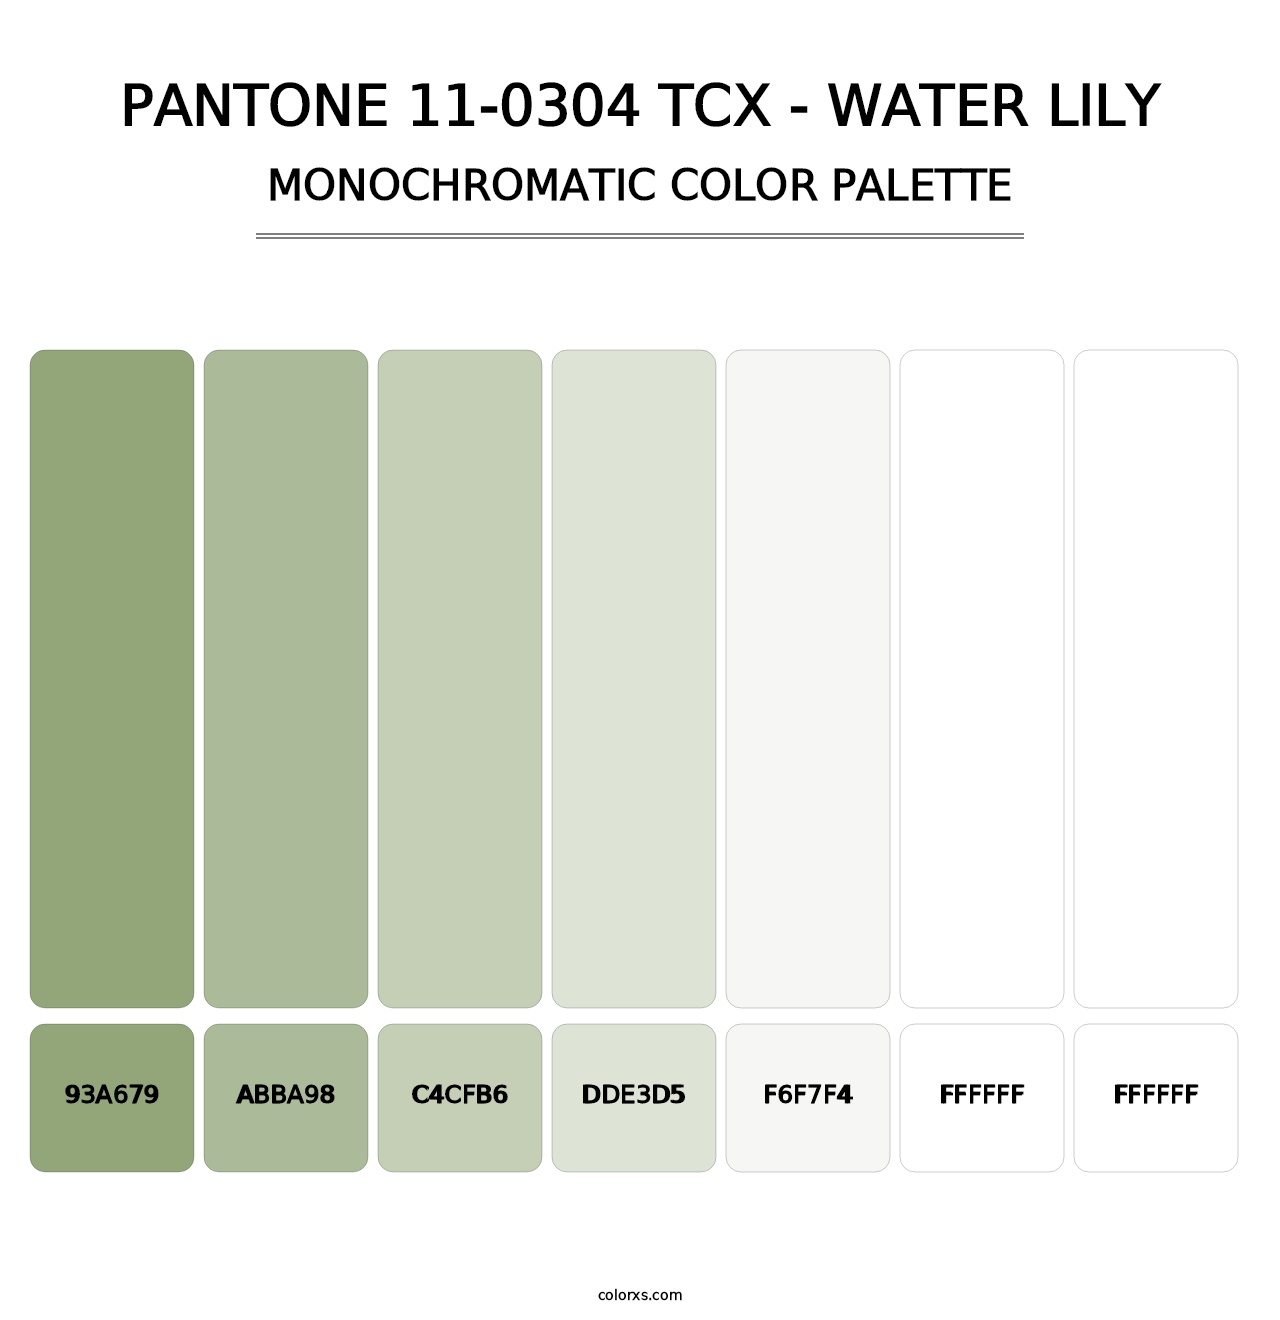 PANTONE 11-0304 TCX - Water Lily - Monochromatic Color Palette